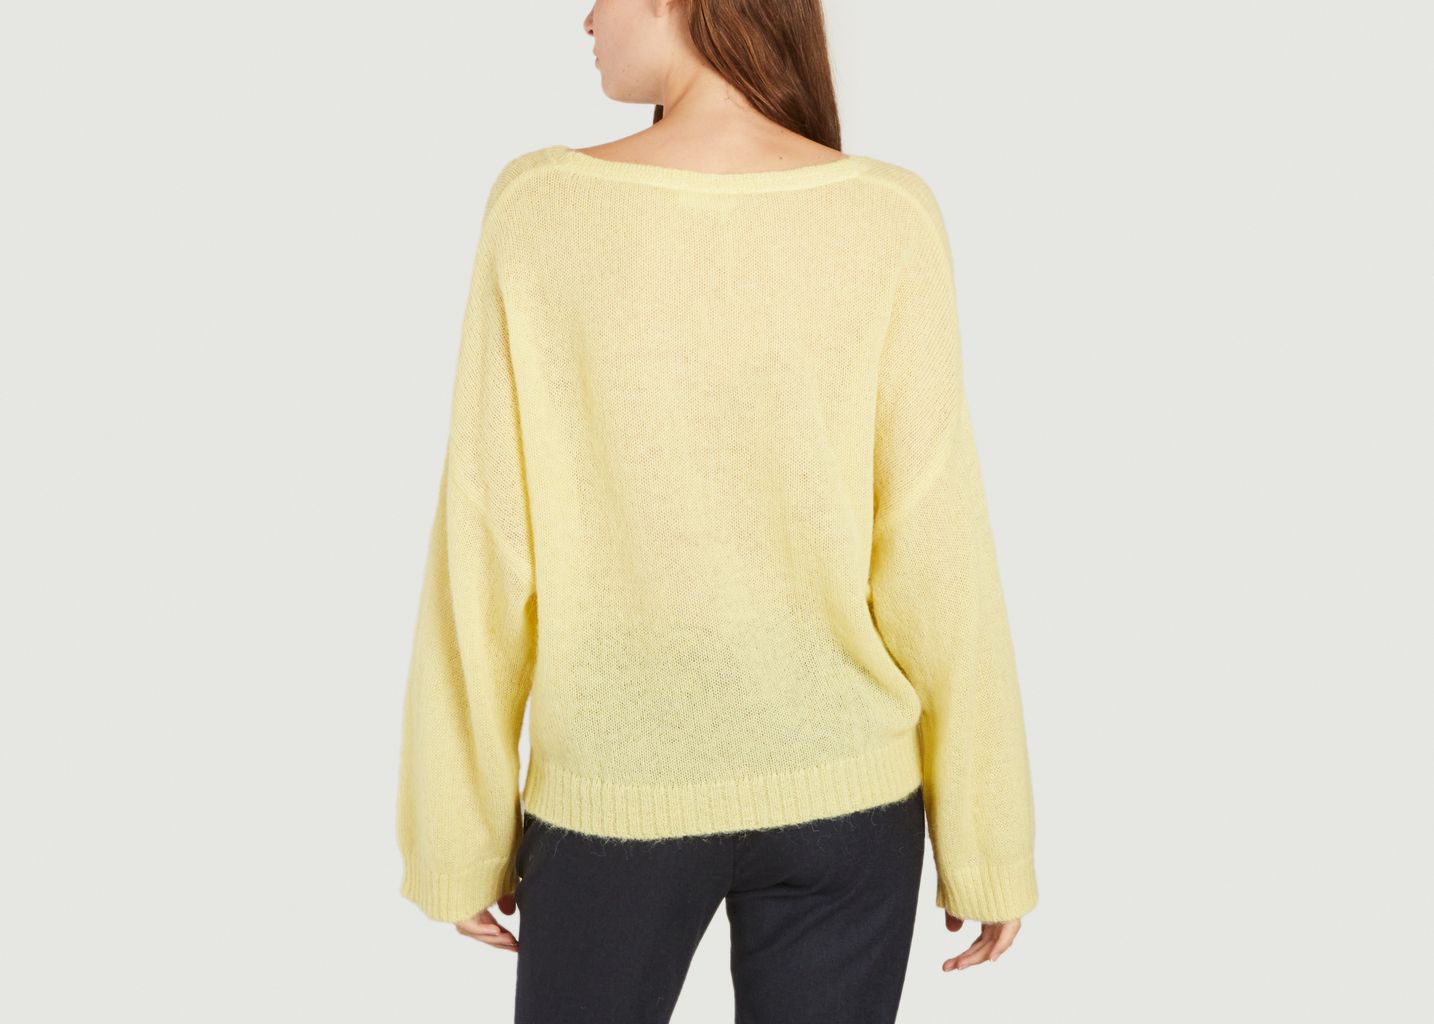 Chloé round neck knit sweater - Karma Koma 